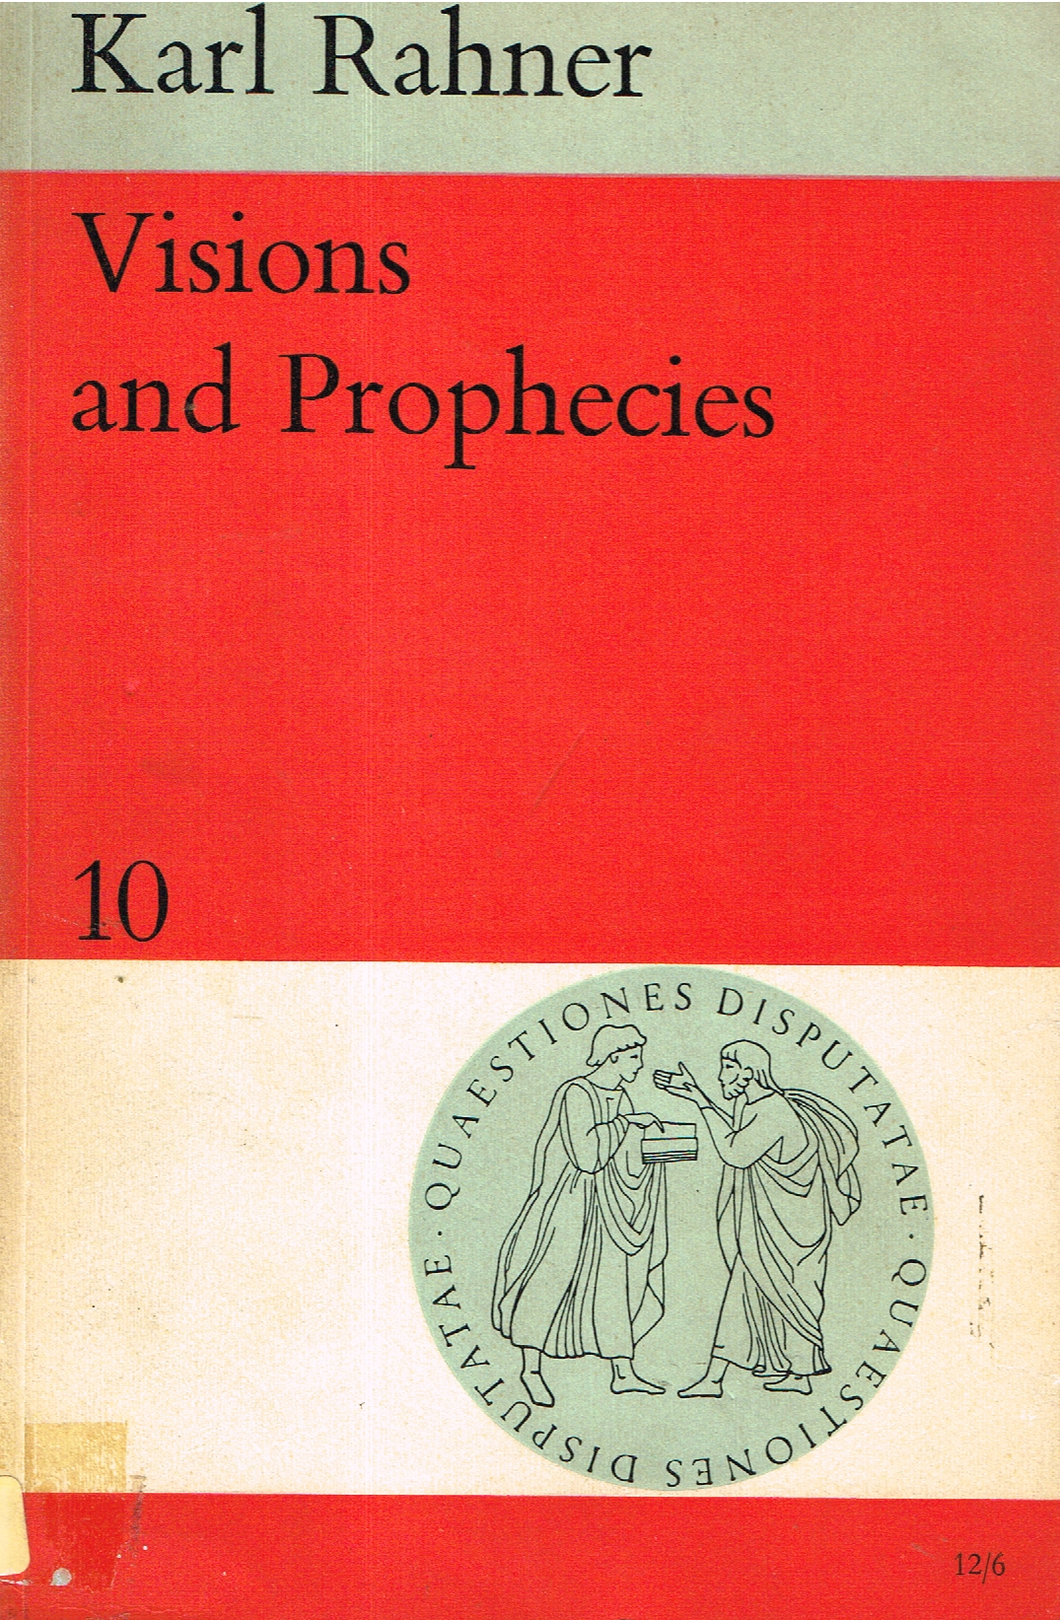 Visionen und Prophezeiungen. Visions and Prophecies (Quaestiones disputatae. no. 10.)